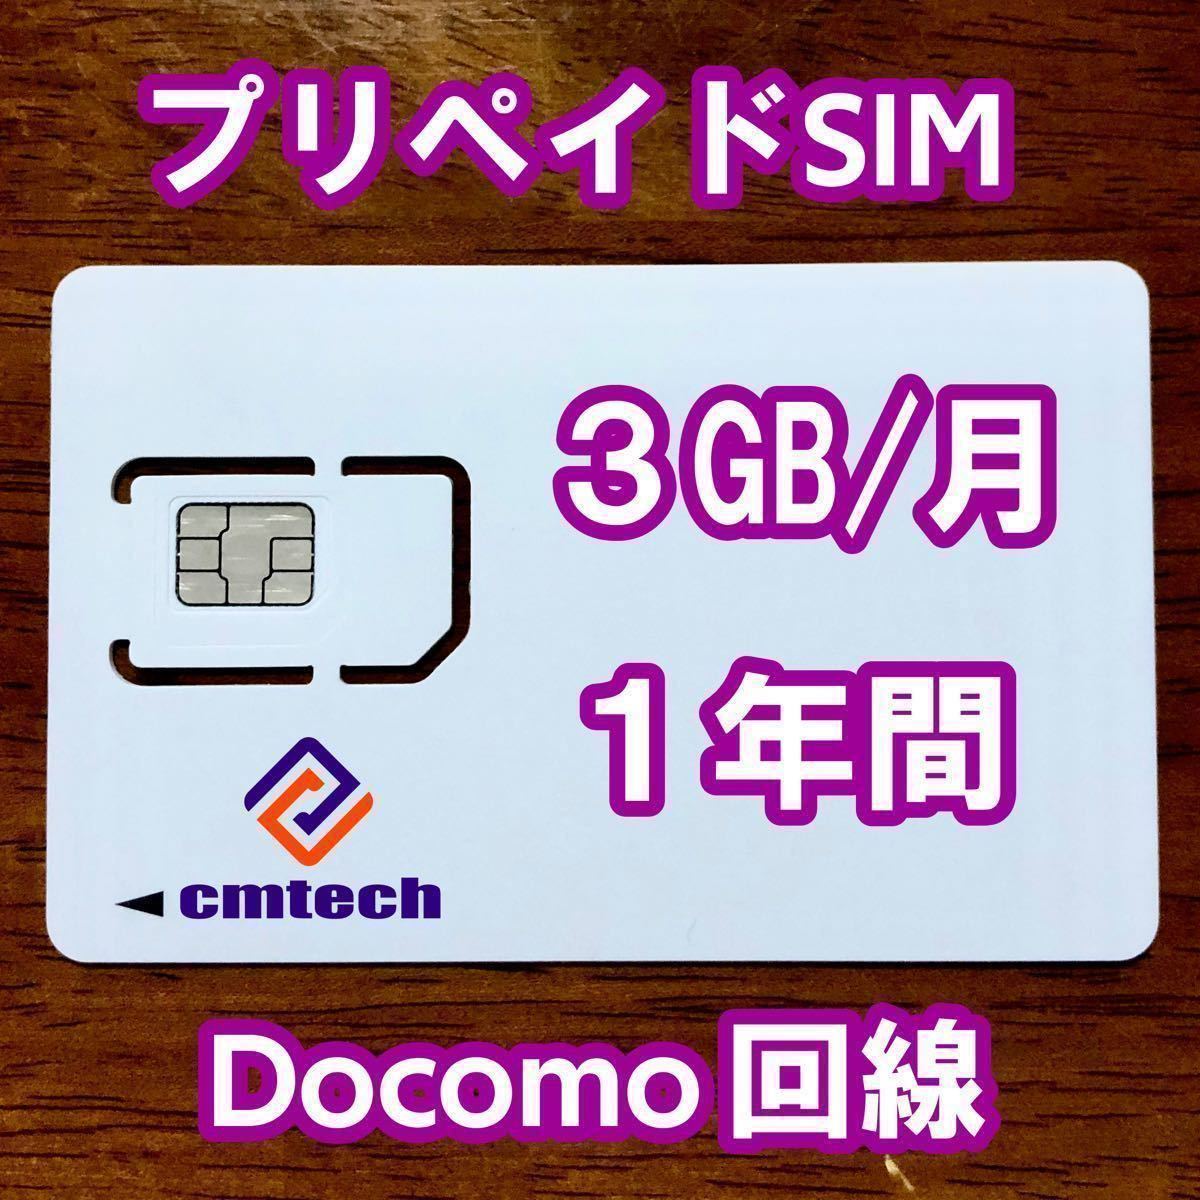 Docomo circuit plipeidosim 3GB/ month 1 years valid data communication sim card 